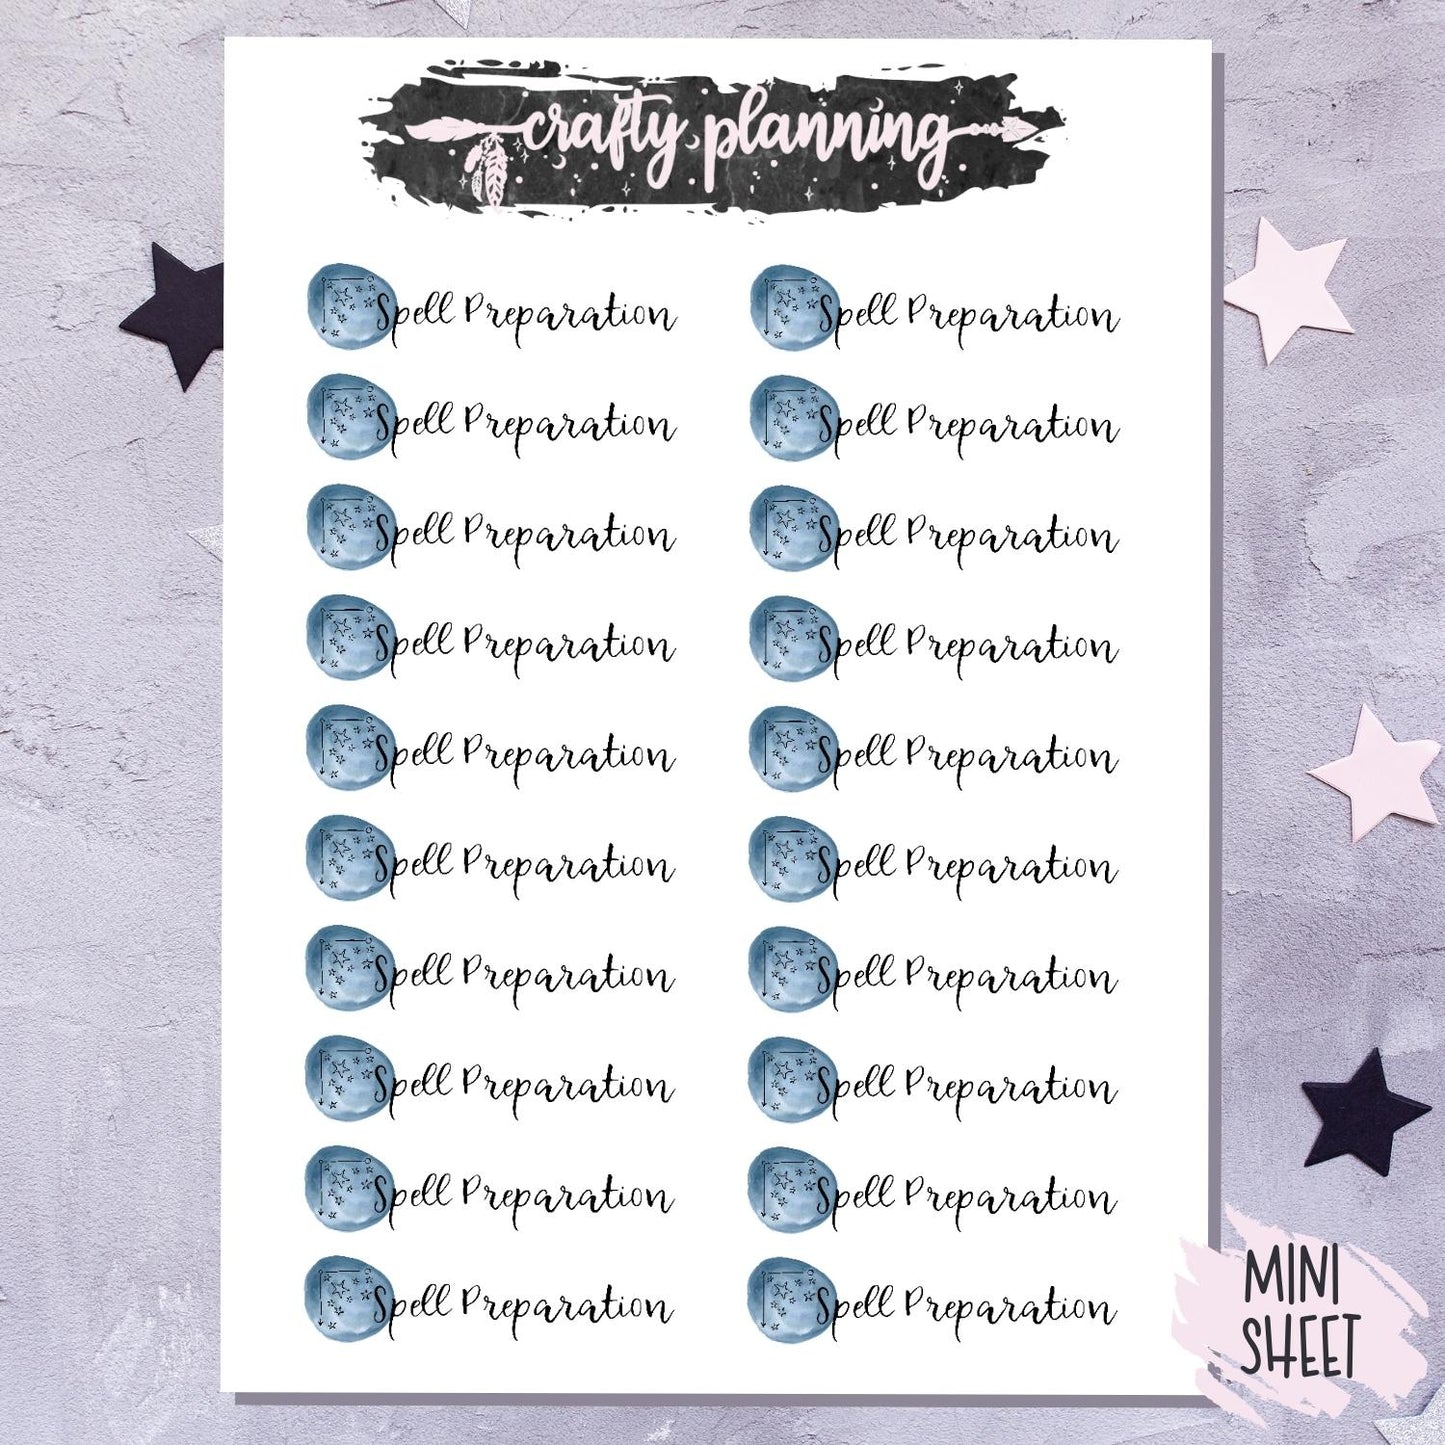 Spell Preparation - Mini Sticker Sheet